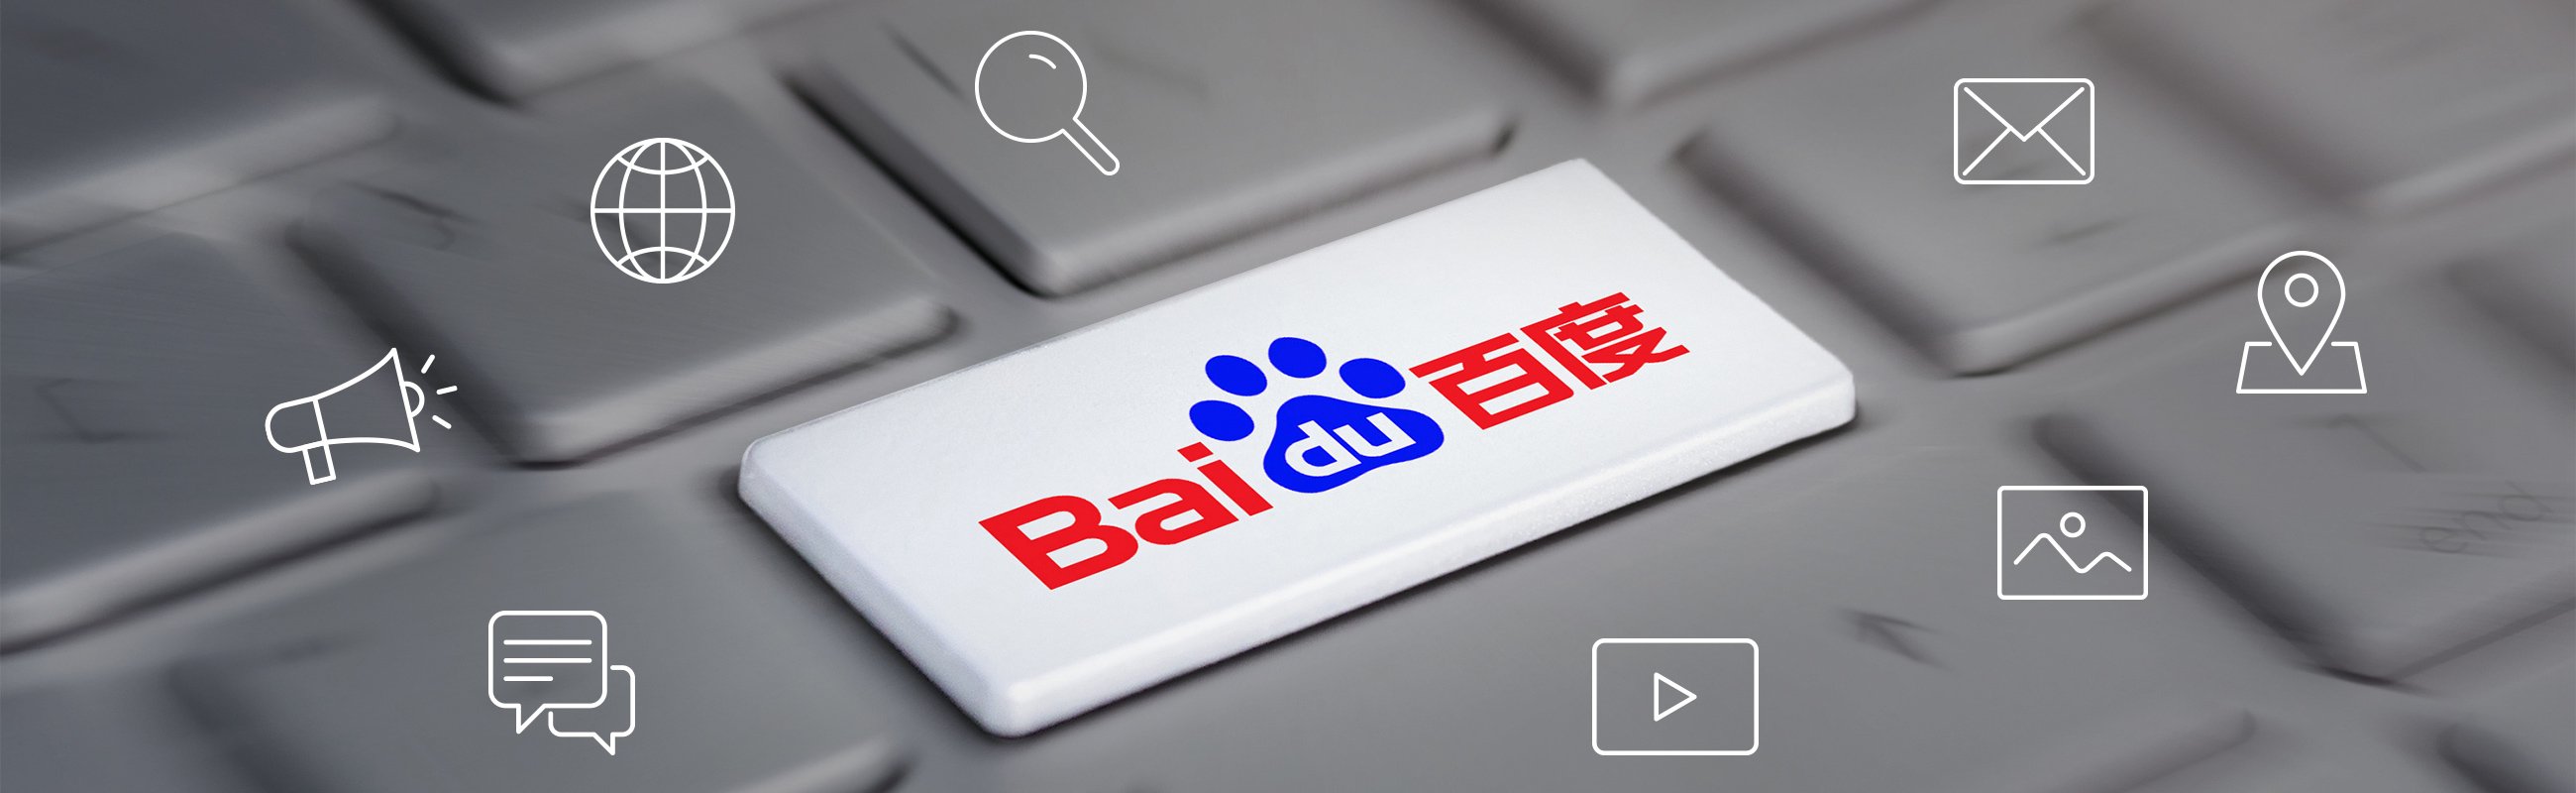 211207_W4_Baidu_header_image_2600x800px